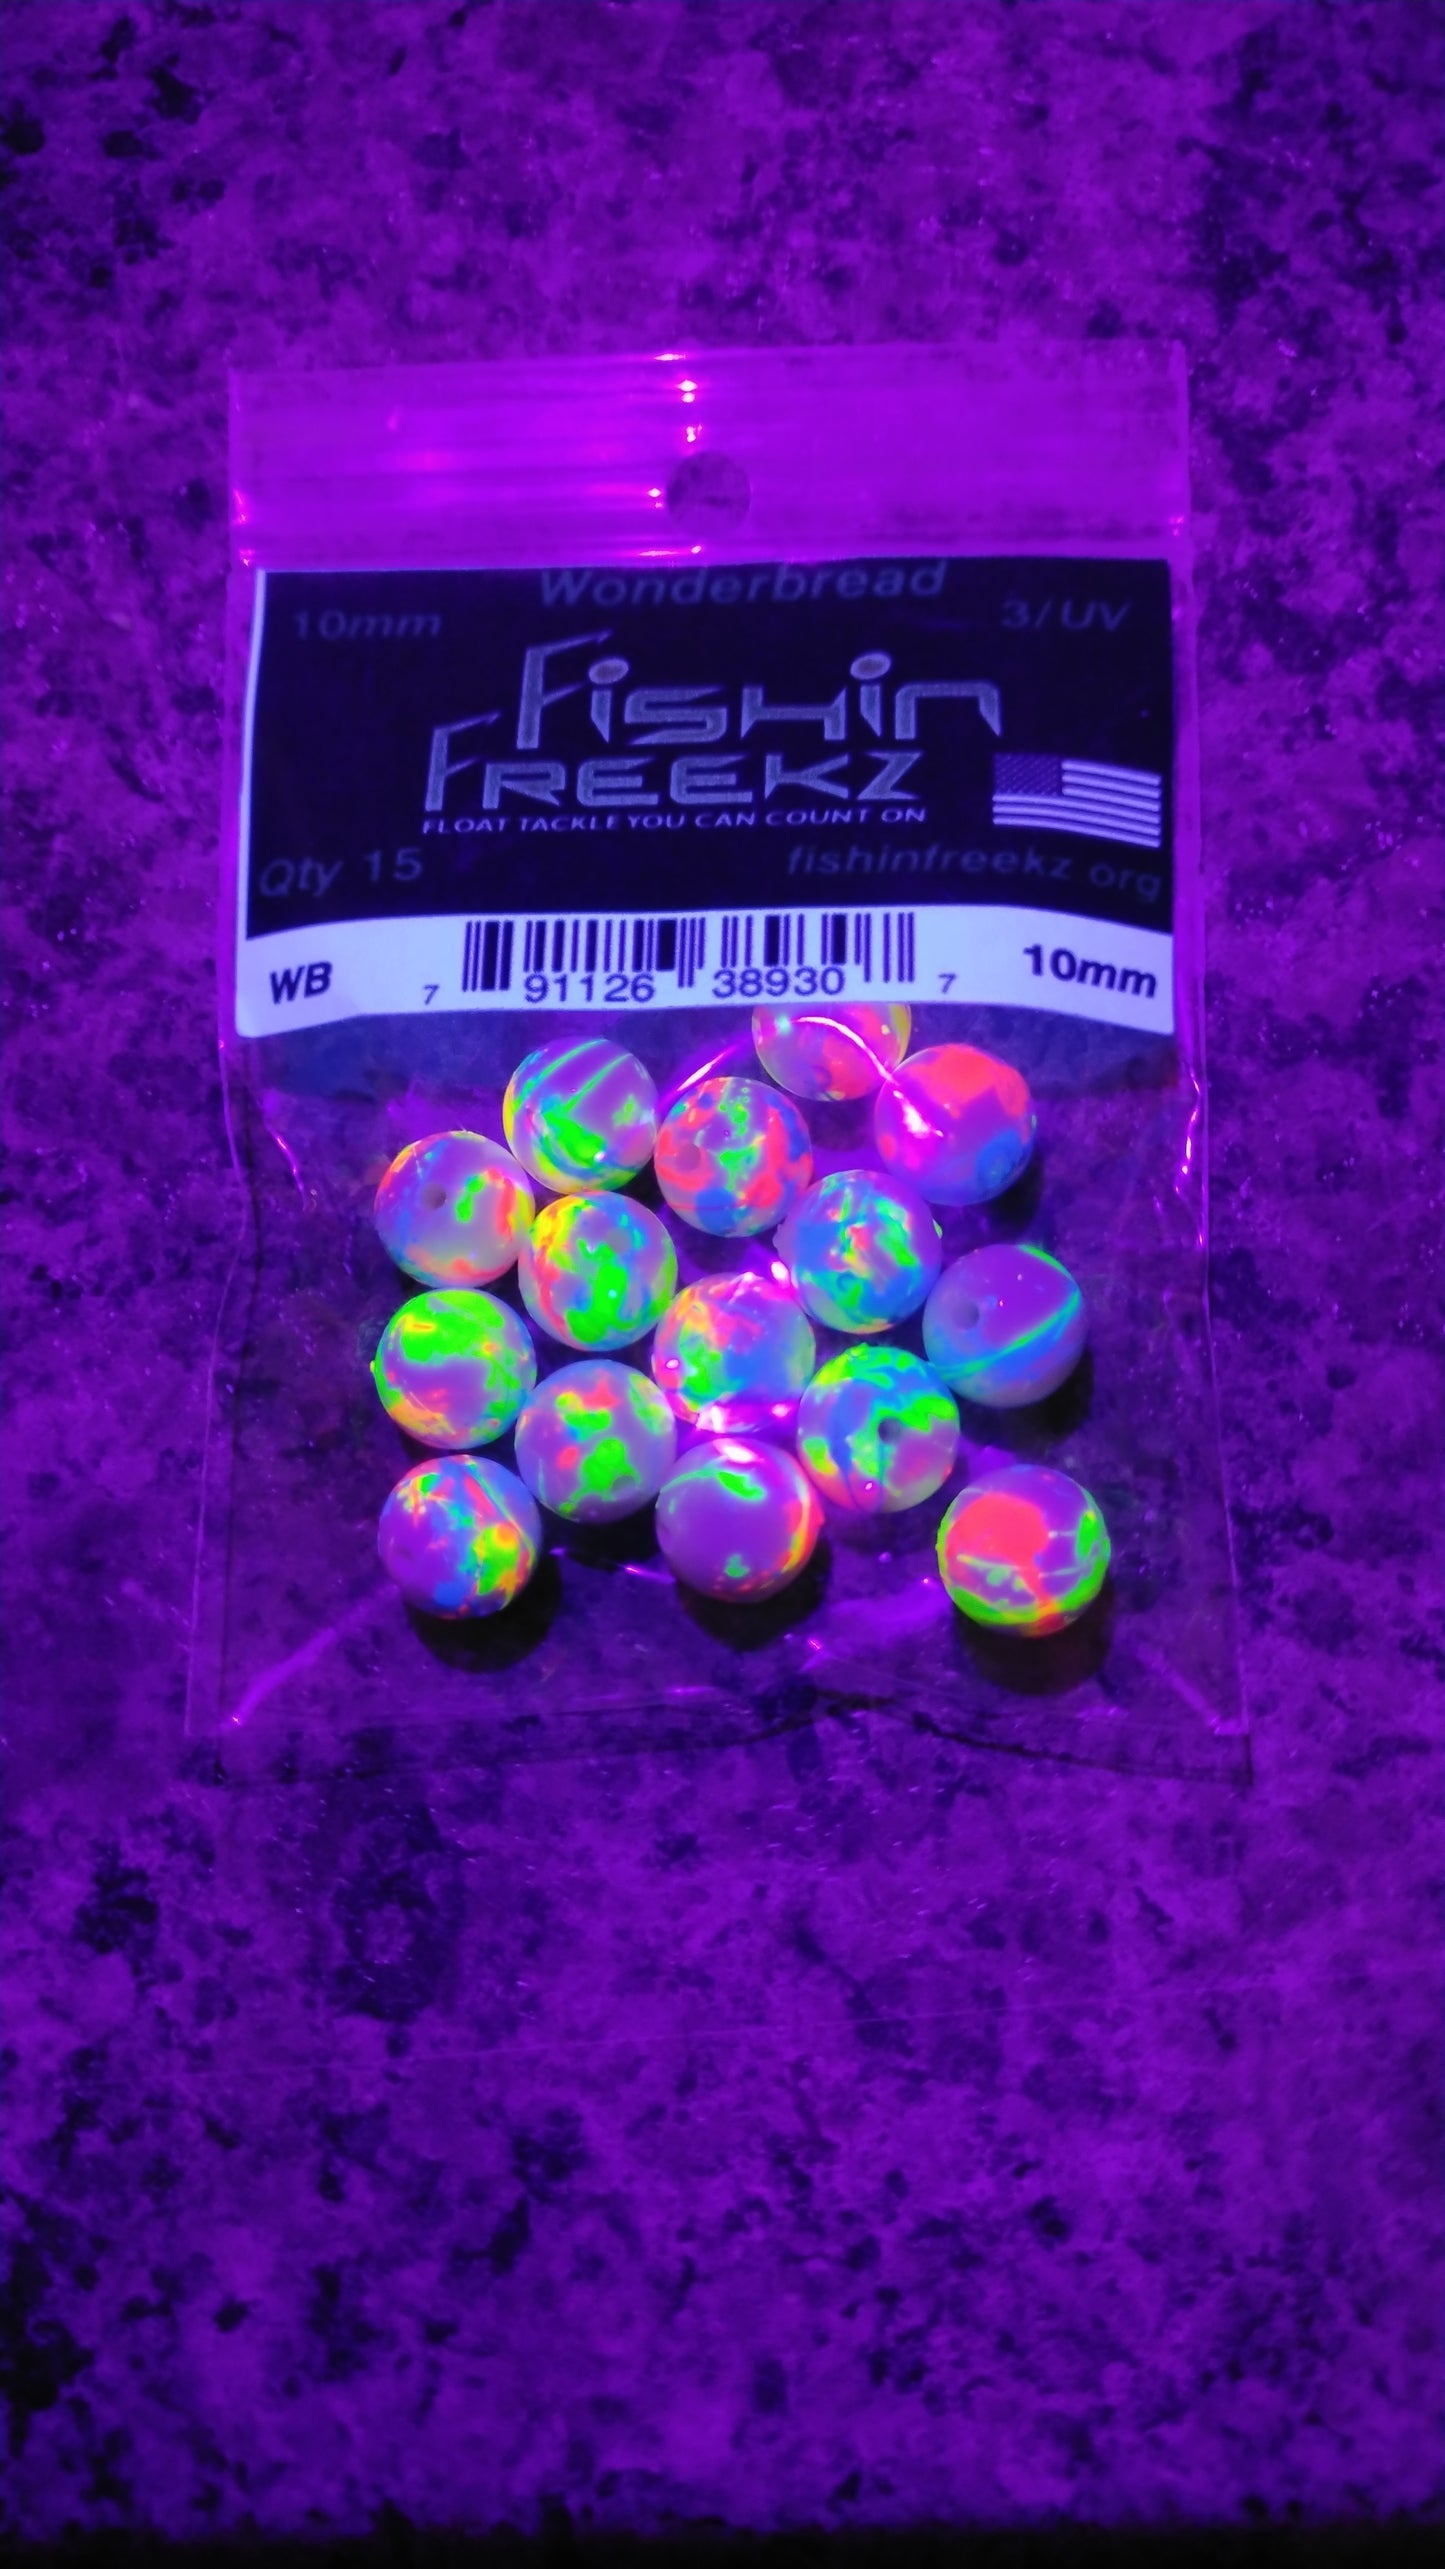 Beads by Fishin Freekz